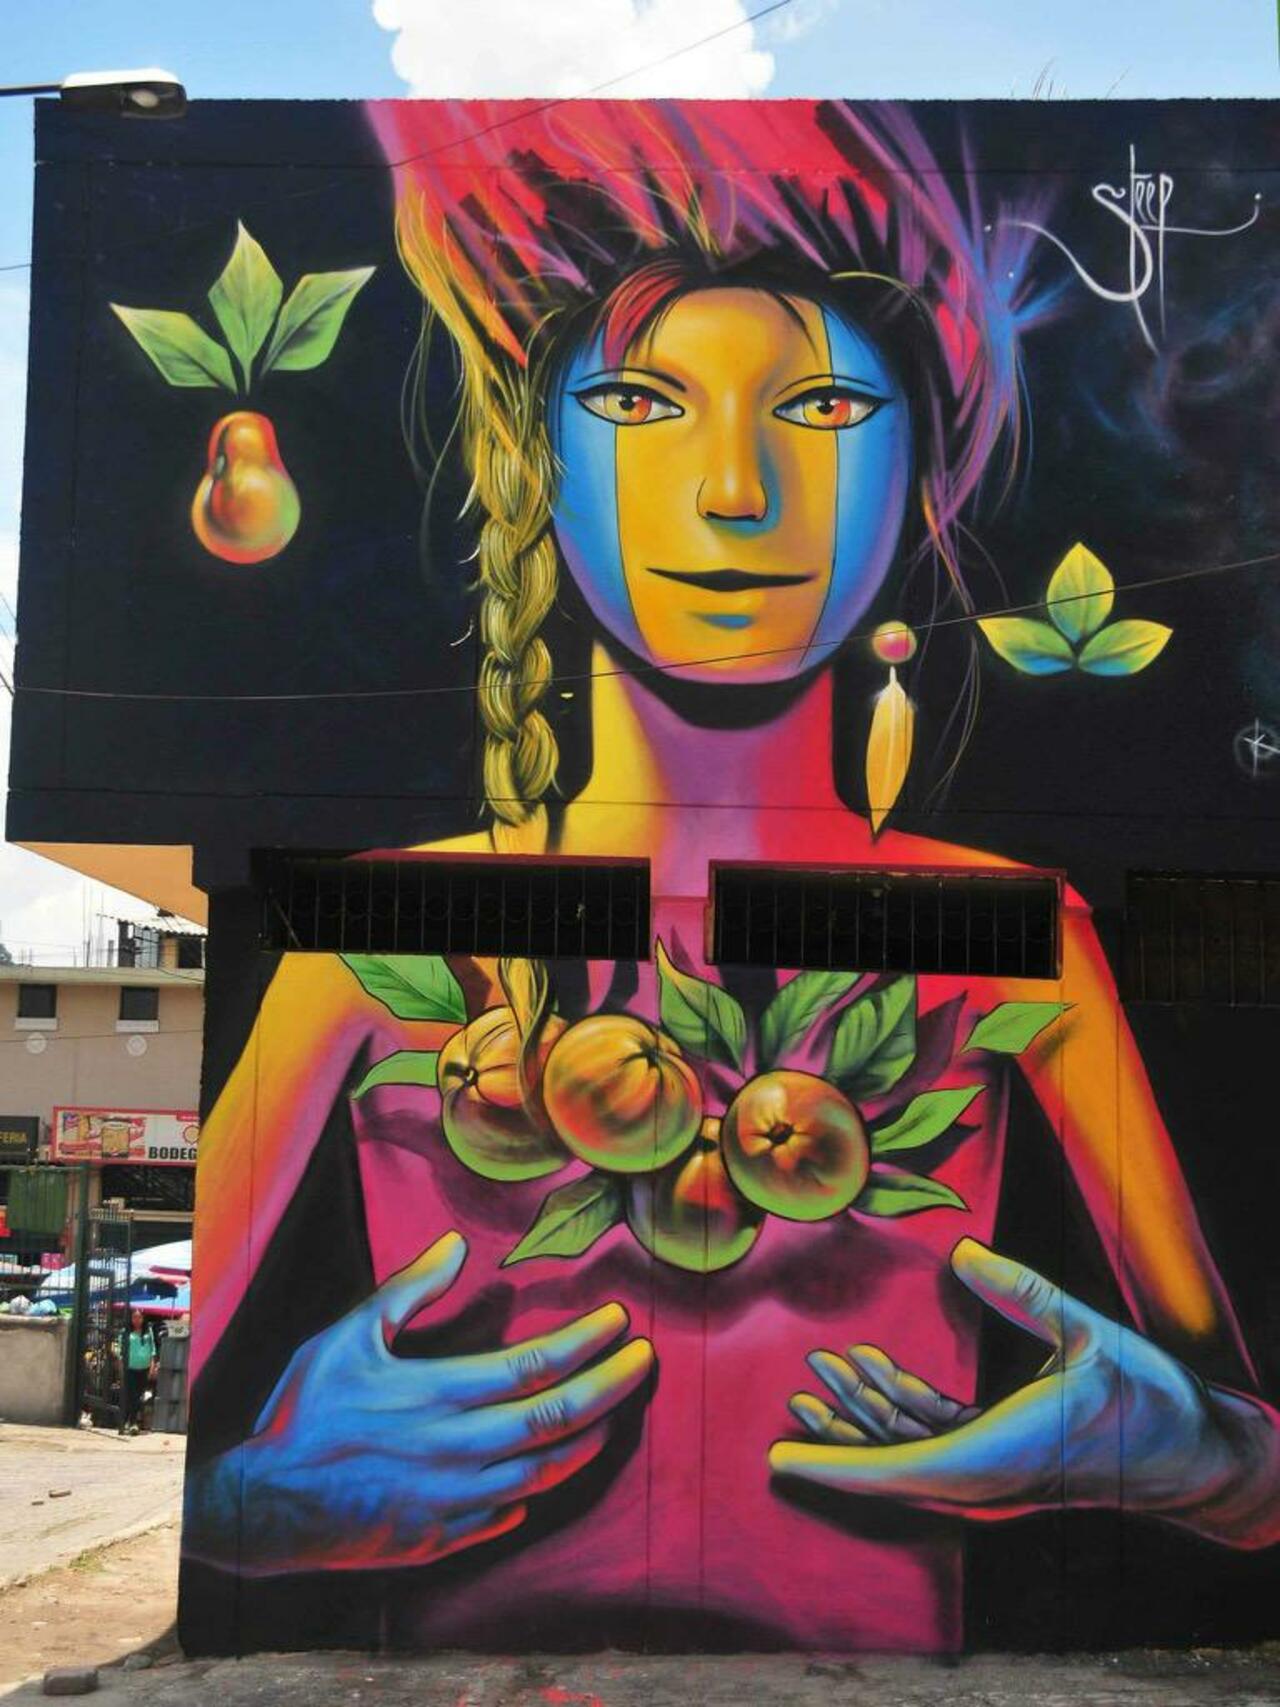 Street Art by Steep #art #graffiti #mural #streetart http://t.co/dKGIfl0HiR http://twitter.com/GoogleStreetArt/status/652717552435638272/photo/1/large?utm_source=fb&utm_medium=fb&utm_campaign=charlesjackso14&utm_content=652720469402103808 … … … http://twitter.com/GoogleStreetArt/status/652717552435638272/photo/1/large?utm_source=fb&utm_medium=fb&utm_campaign=charlesjackso14&utm_content=652728471379165188